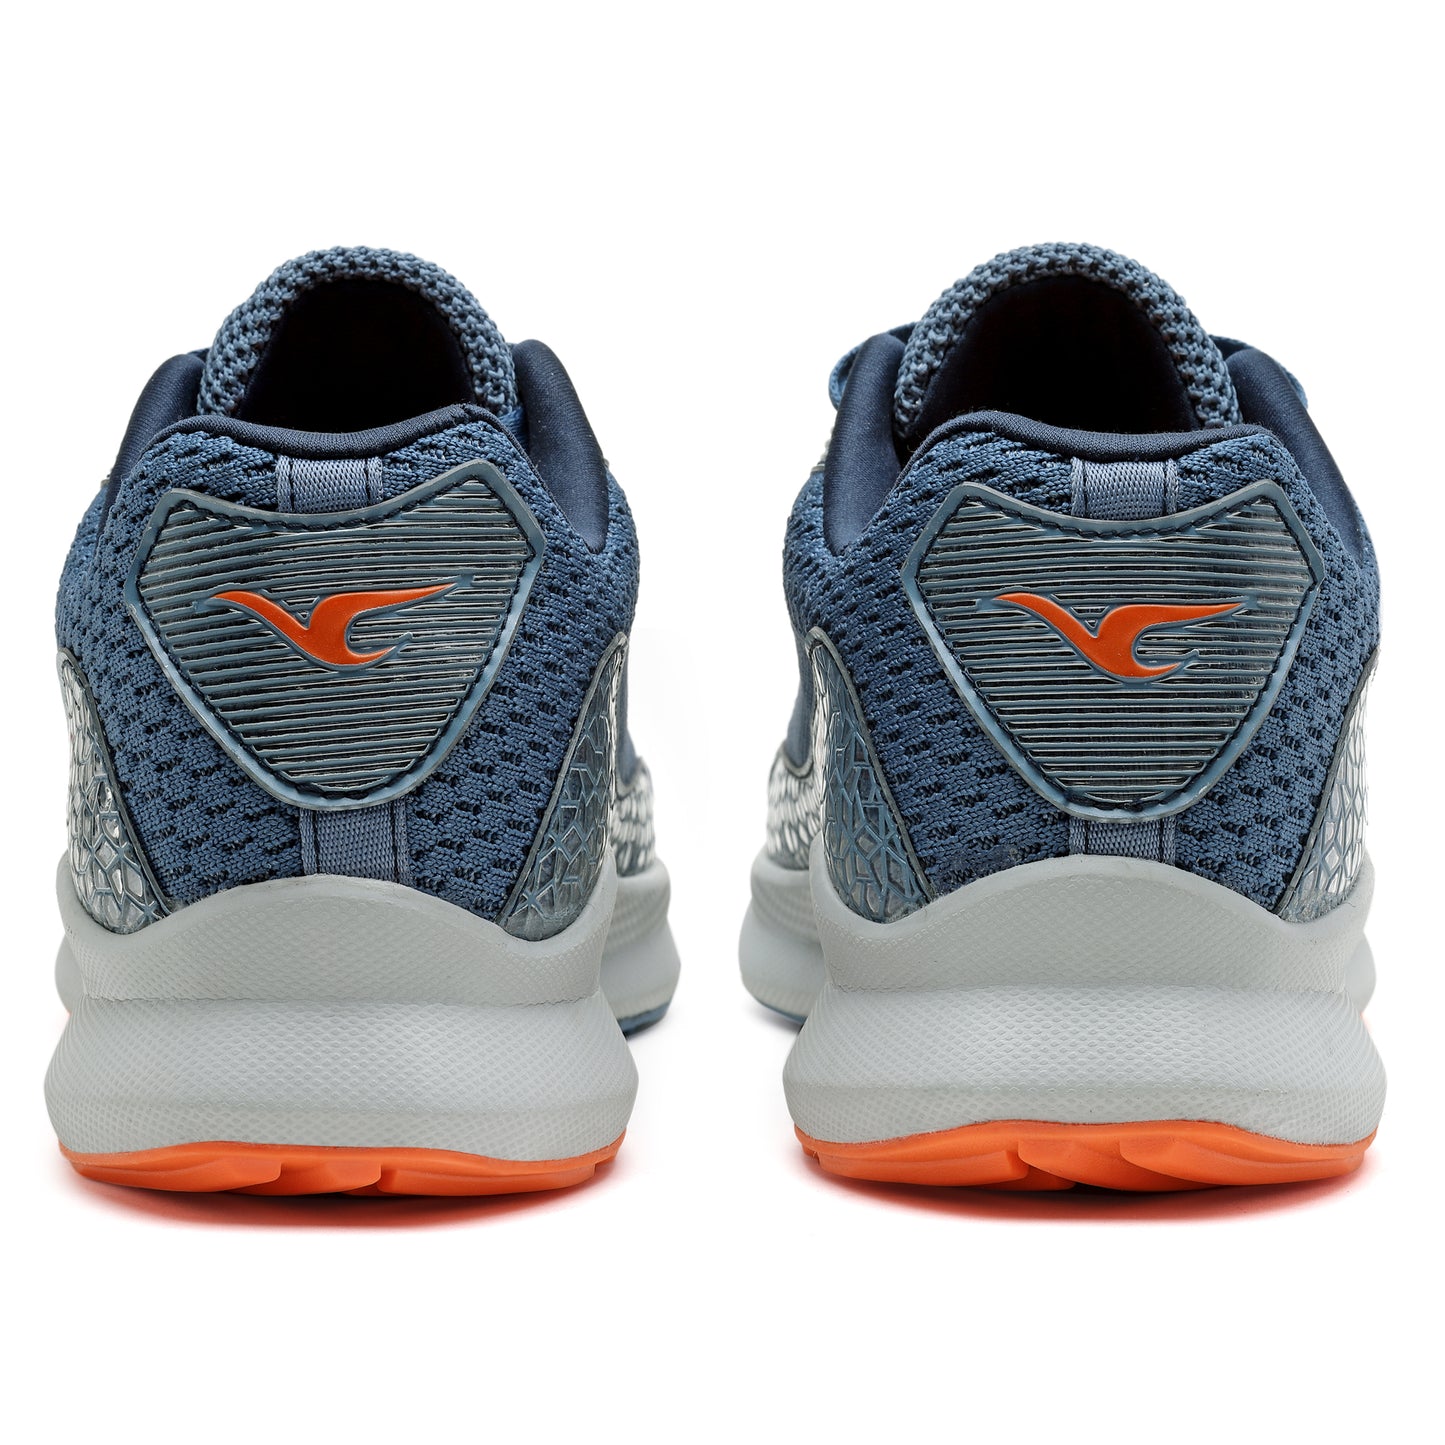 Vomax Sports York-01 Men's Running Sports Shoes